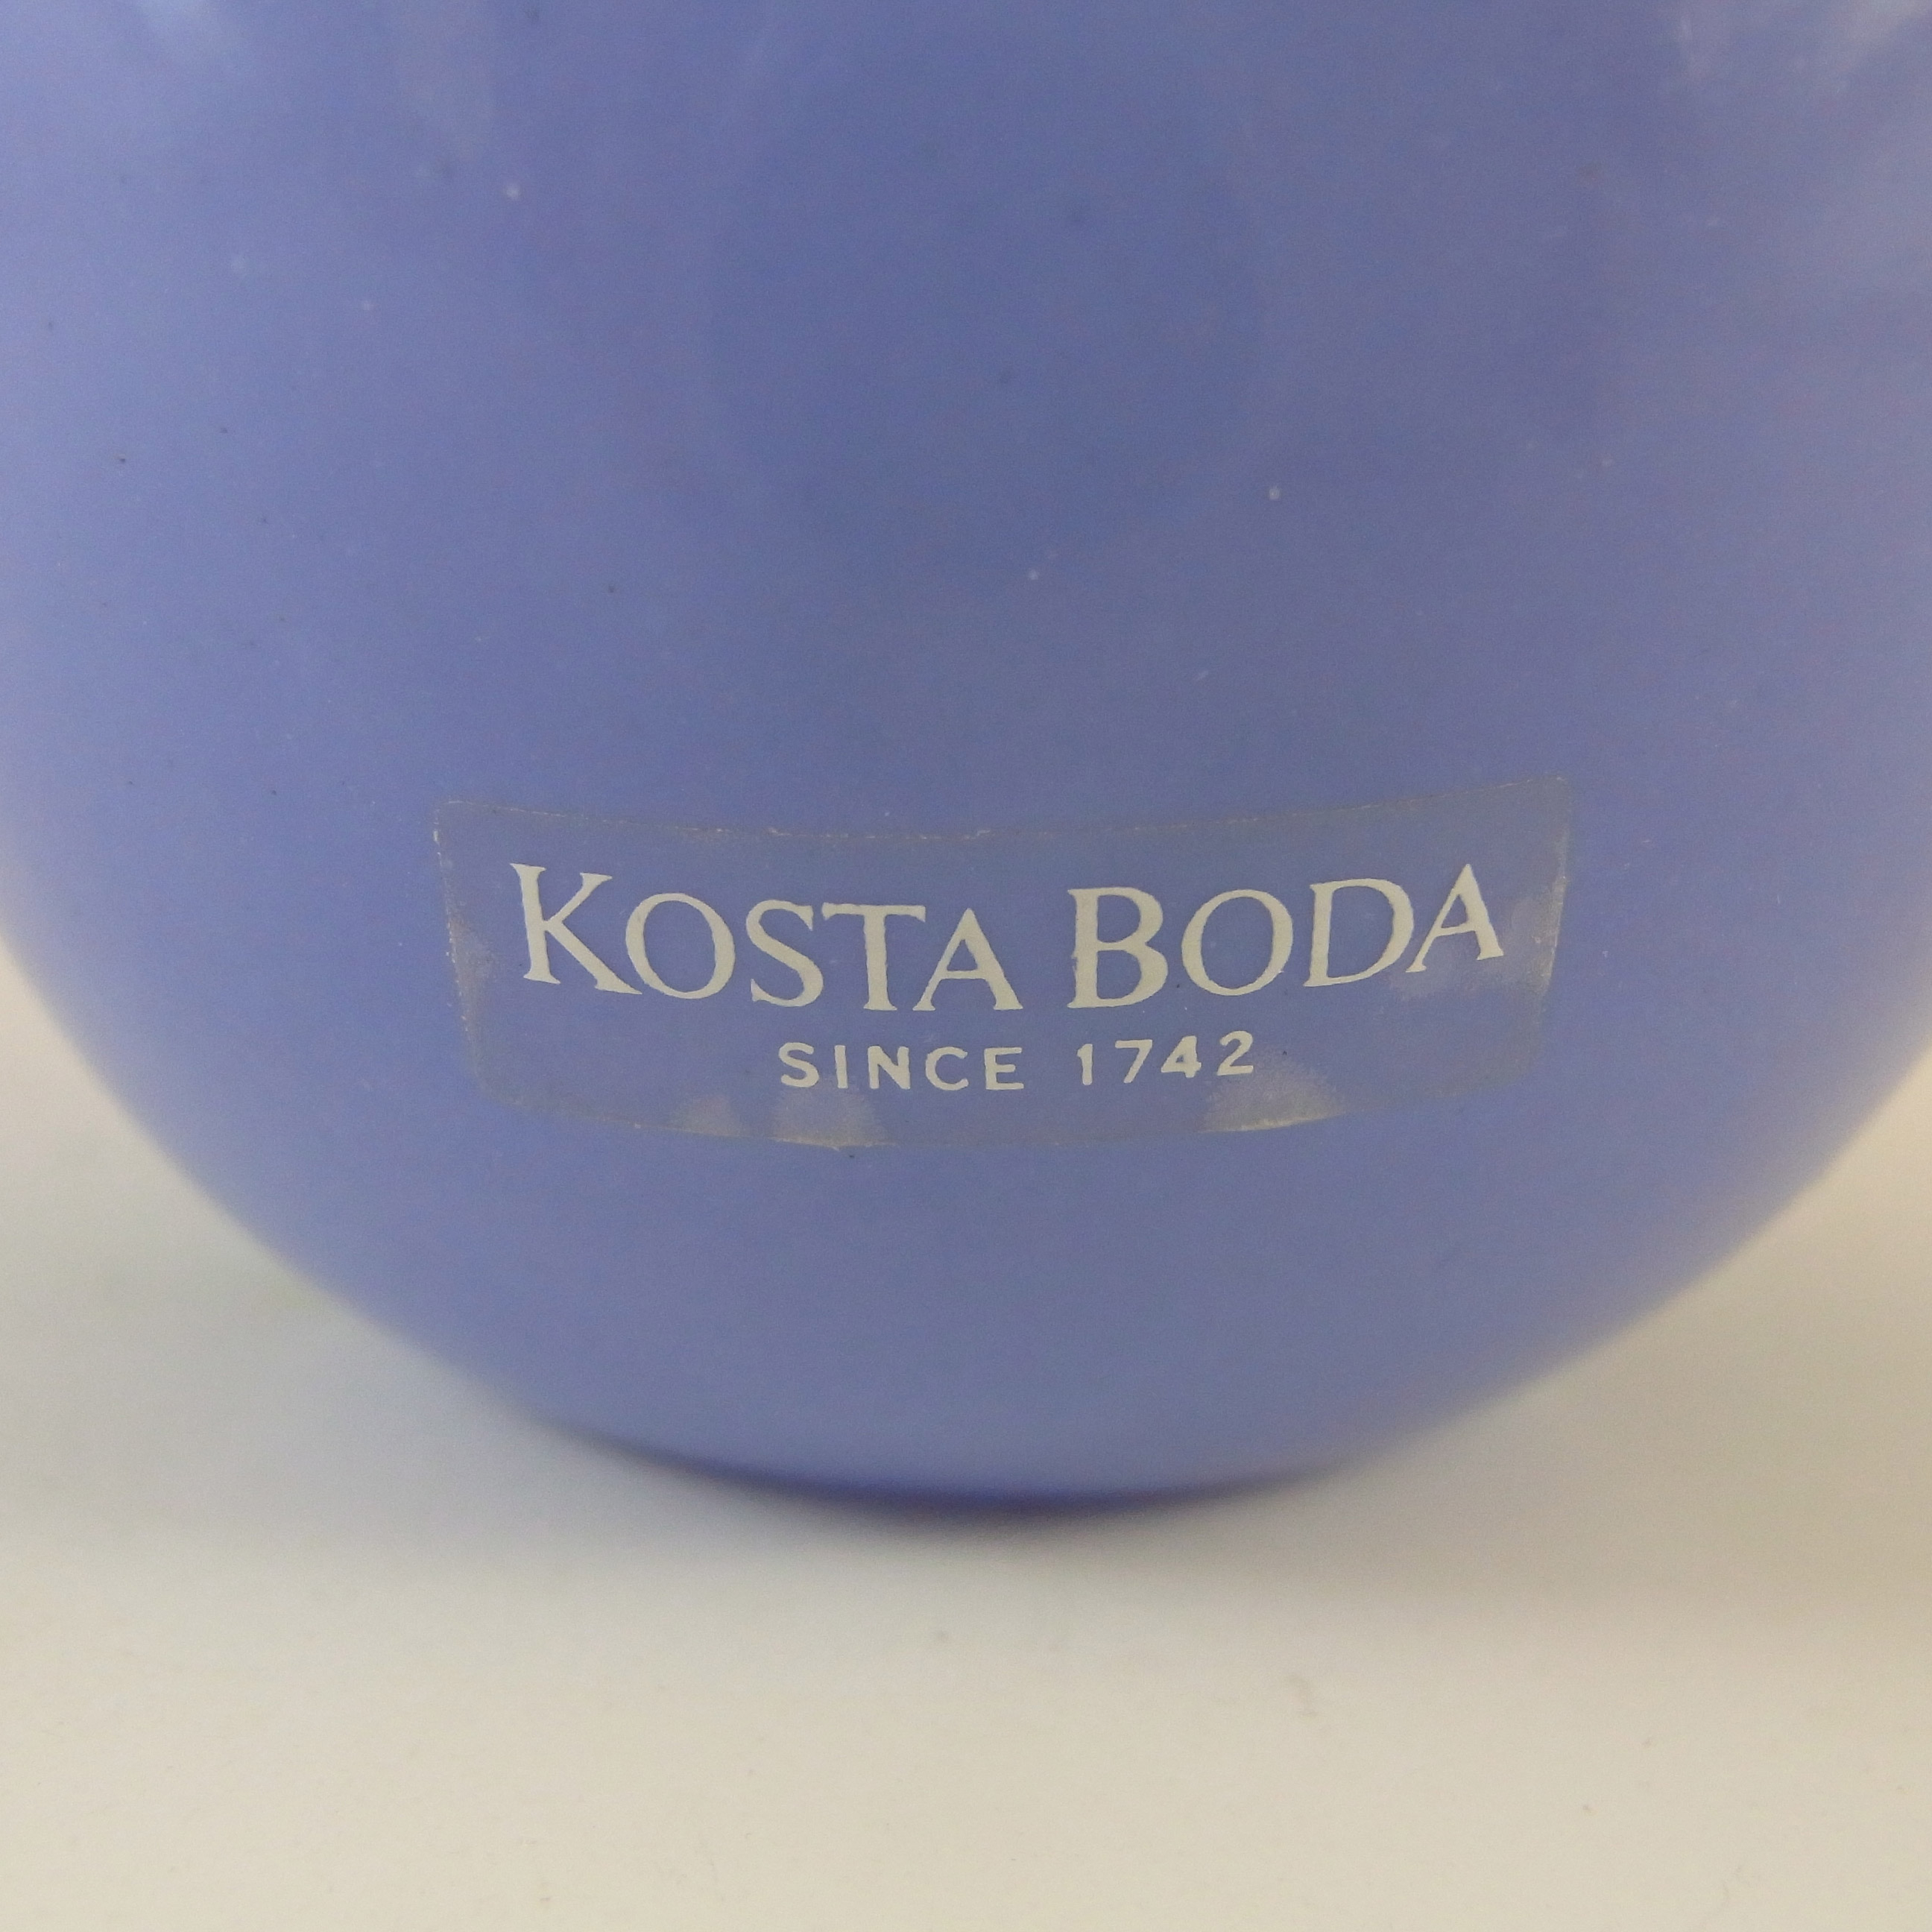 SIGNED Kosta Boda Blue Glass Vase by Gunnel Sahlin - Click Image to Close